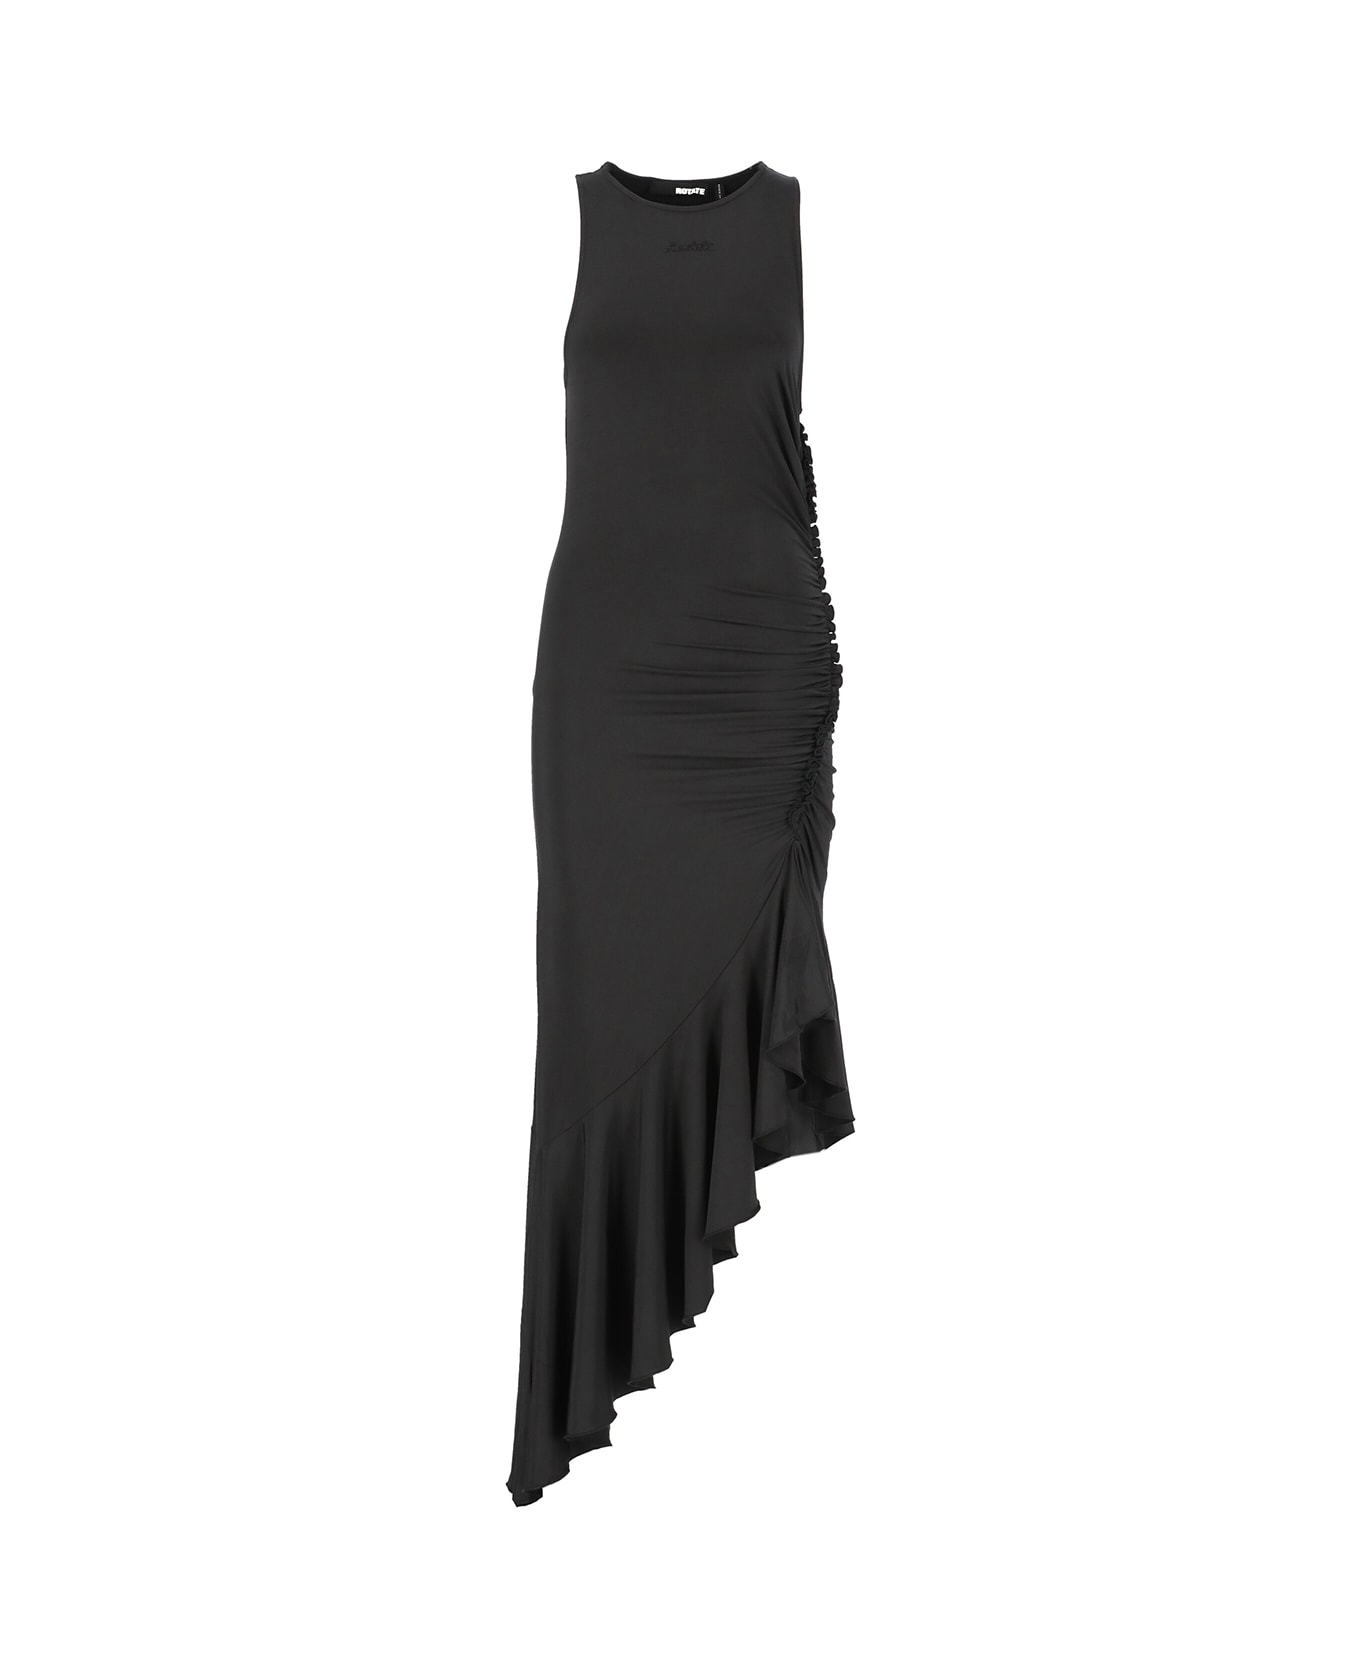 Rotate by Birger Christensen Slinky Dress - Black